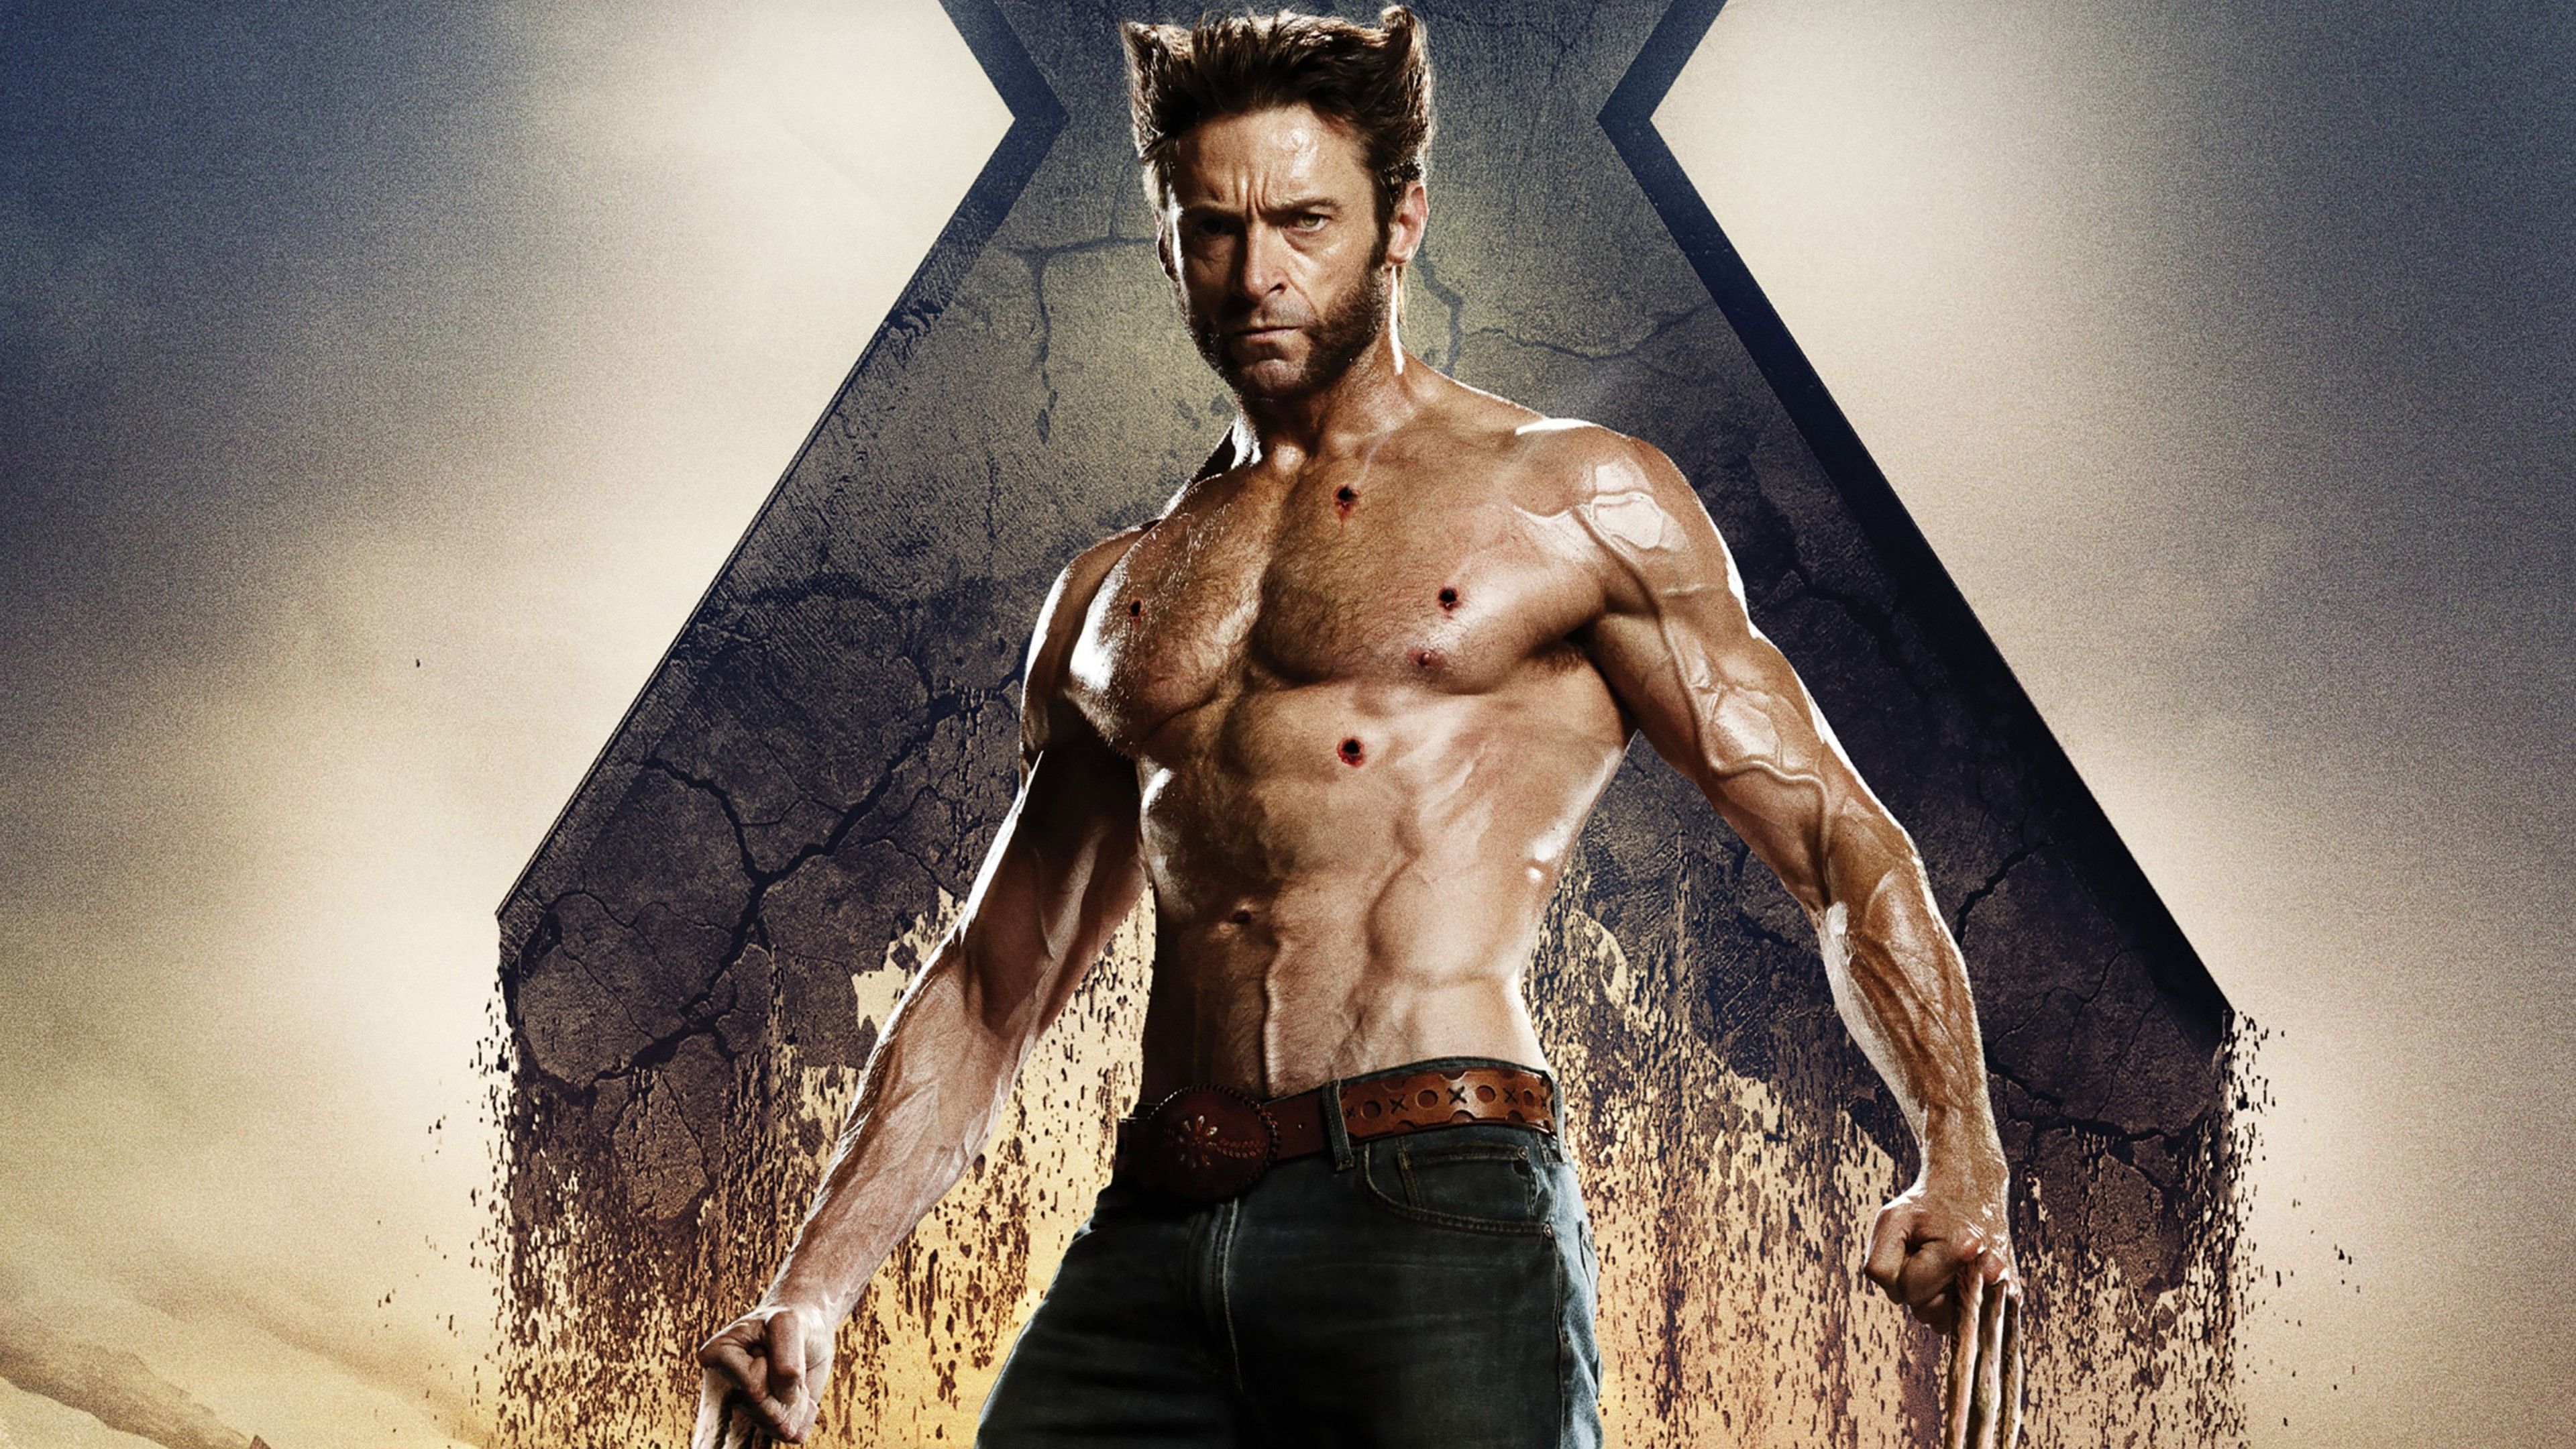 Wallpaper 4k Wolverine In X Men movies wallpaper, wolverine wallpaper, x men wallpaper